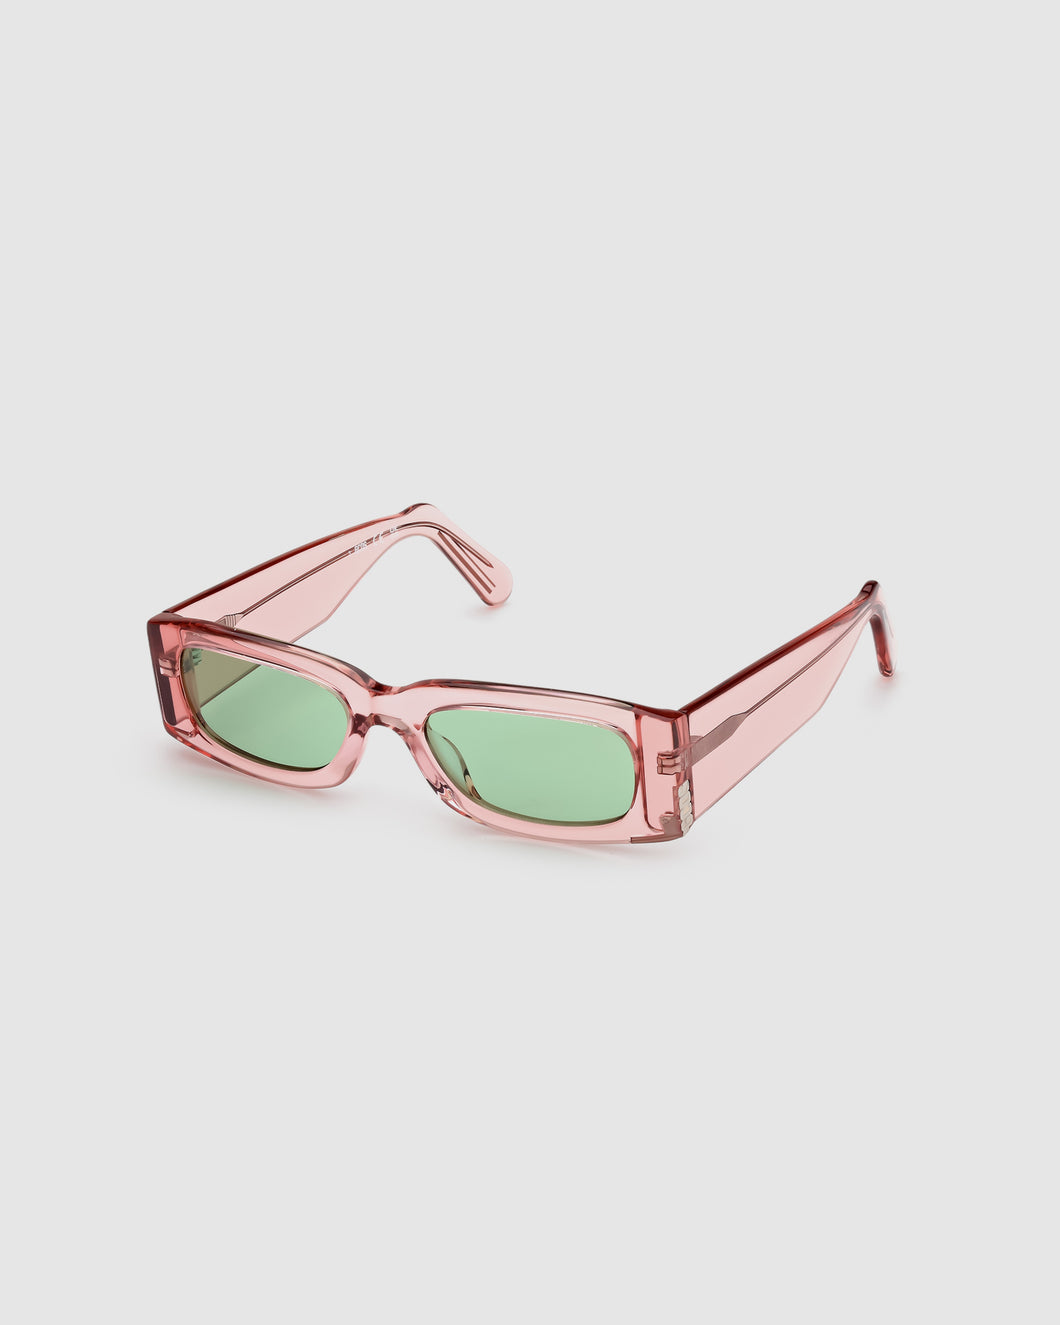 GD020 Rectangular sunglasses: Unisex Sunglasses Pink | GCDS